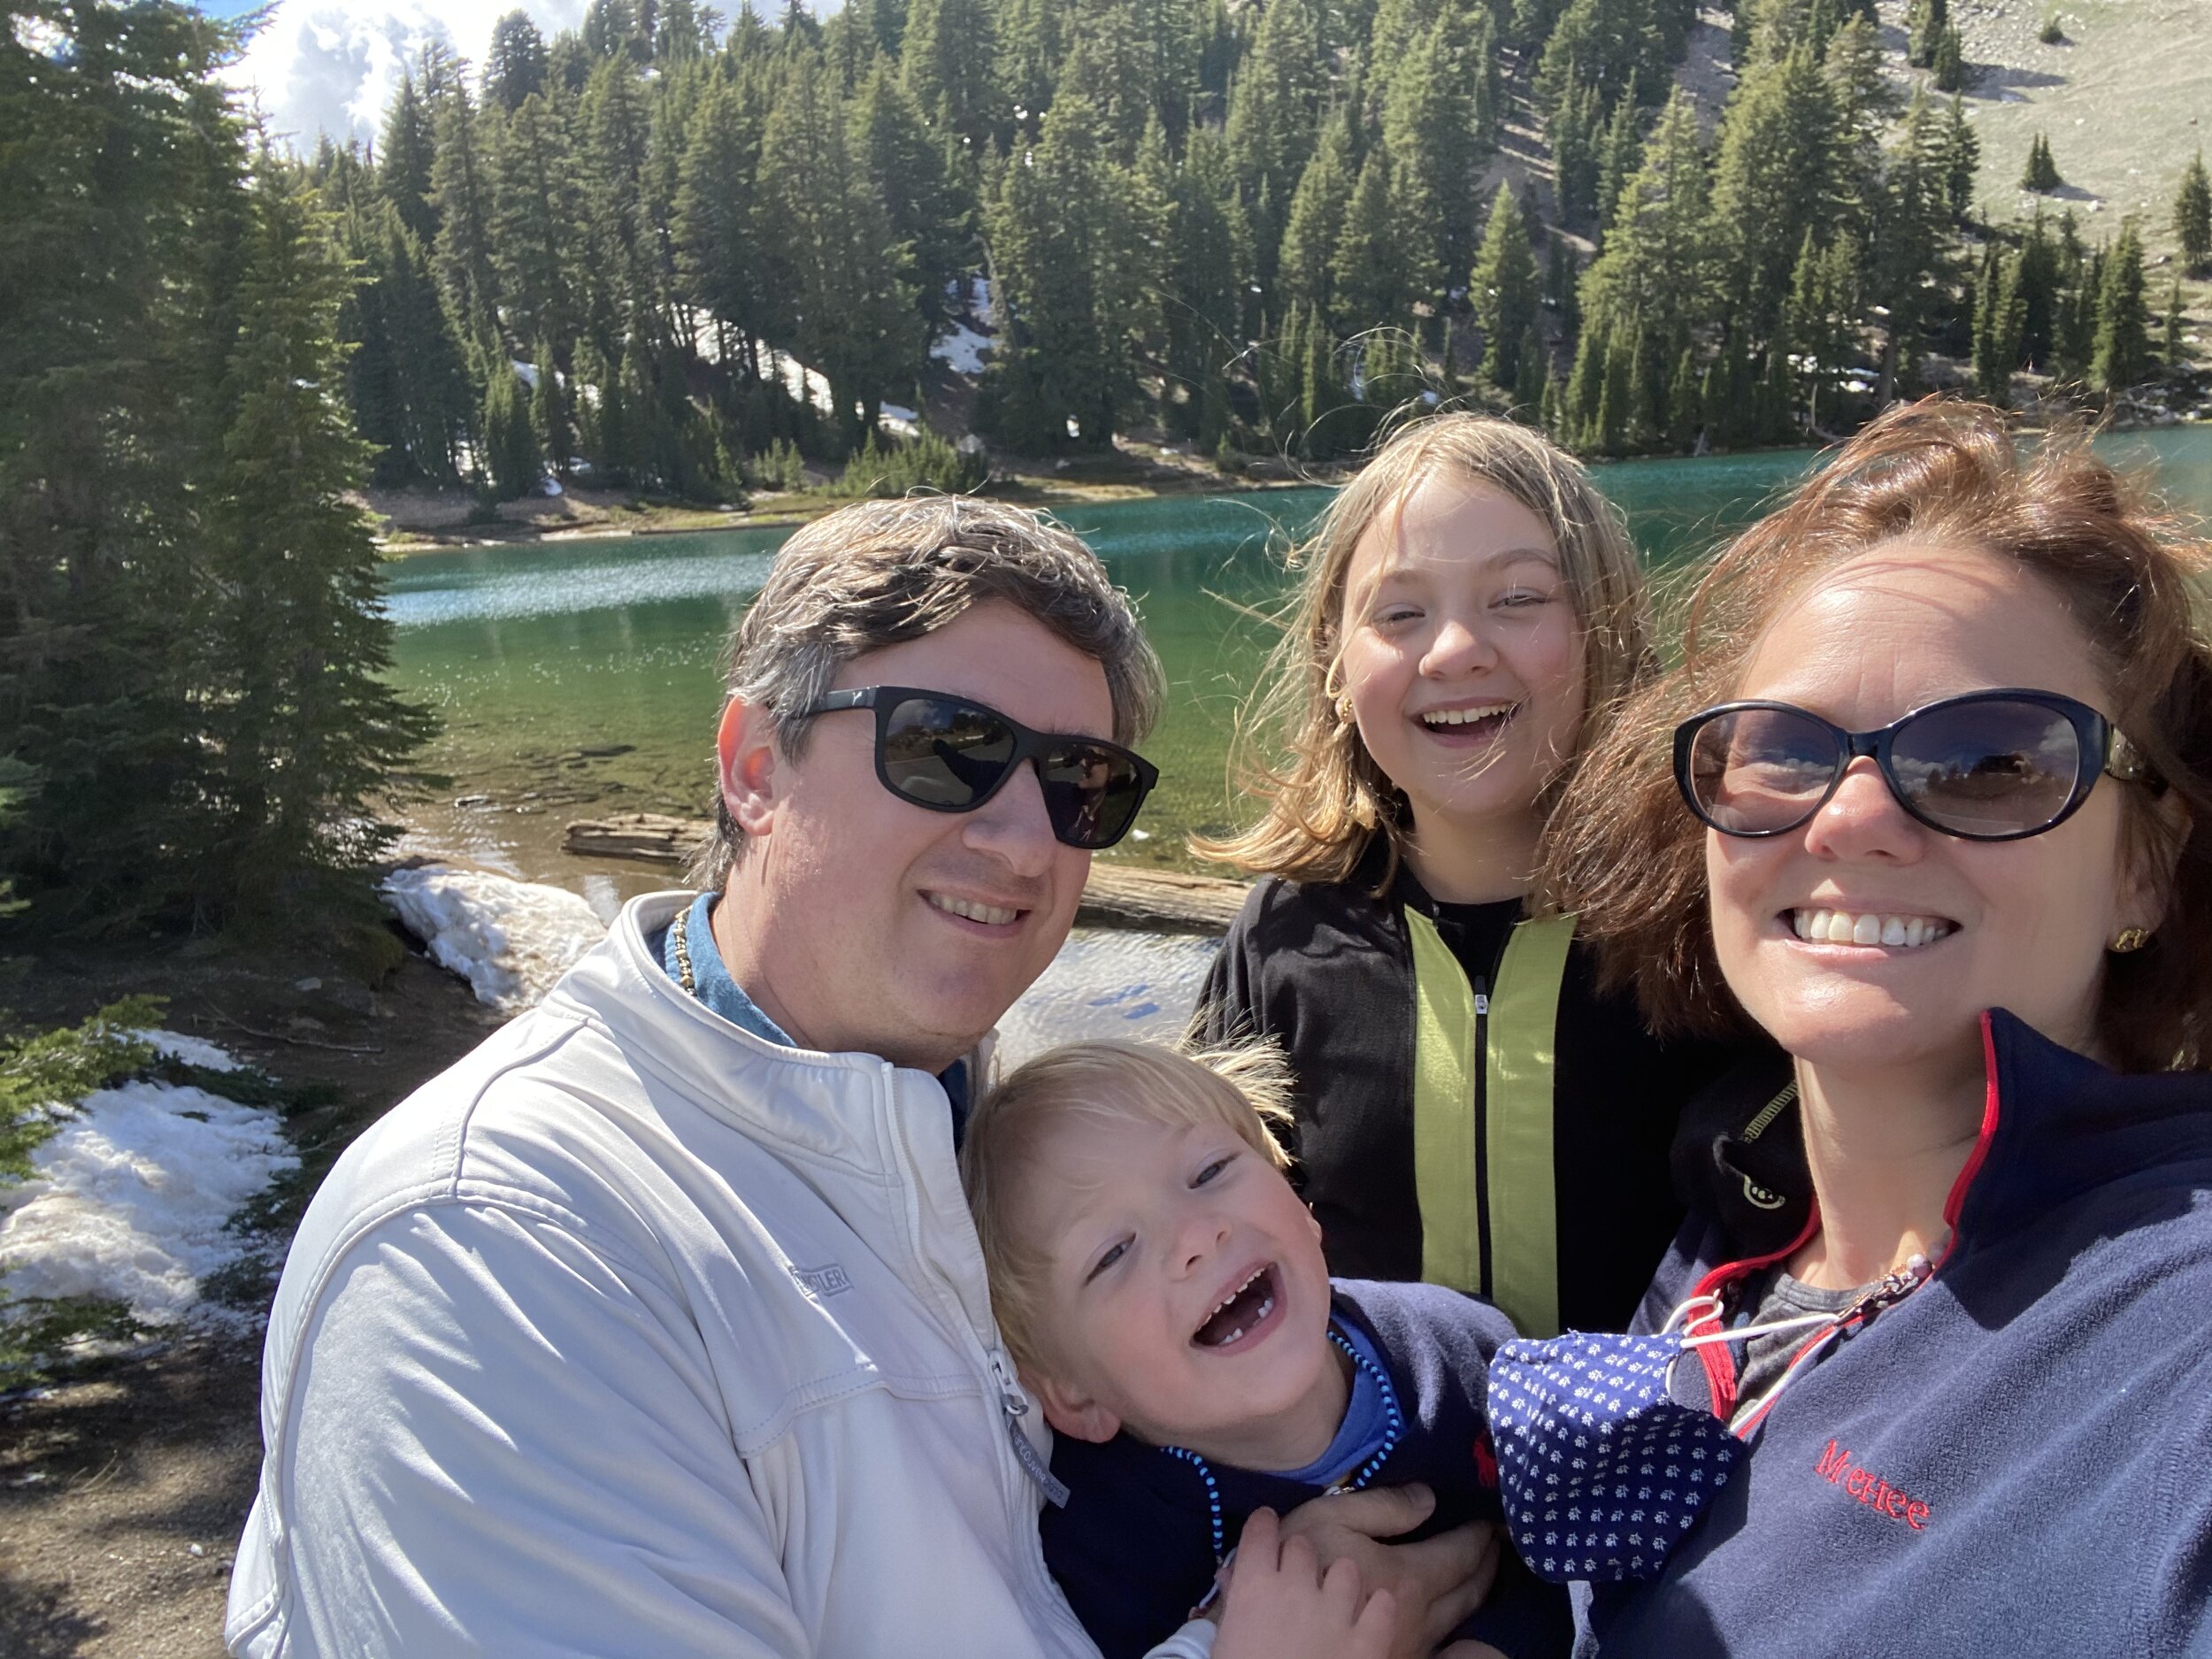 Family selfie in front of Emerald Lake, by Karen Boudreaux, June 8, 2021